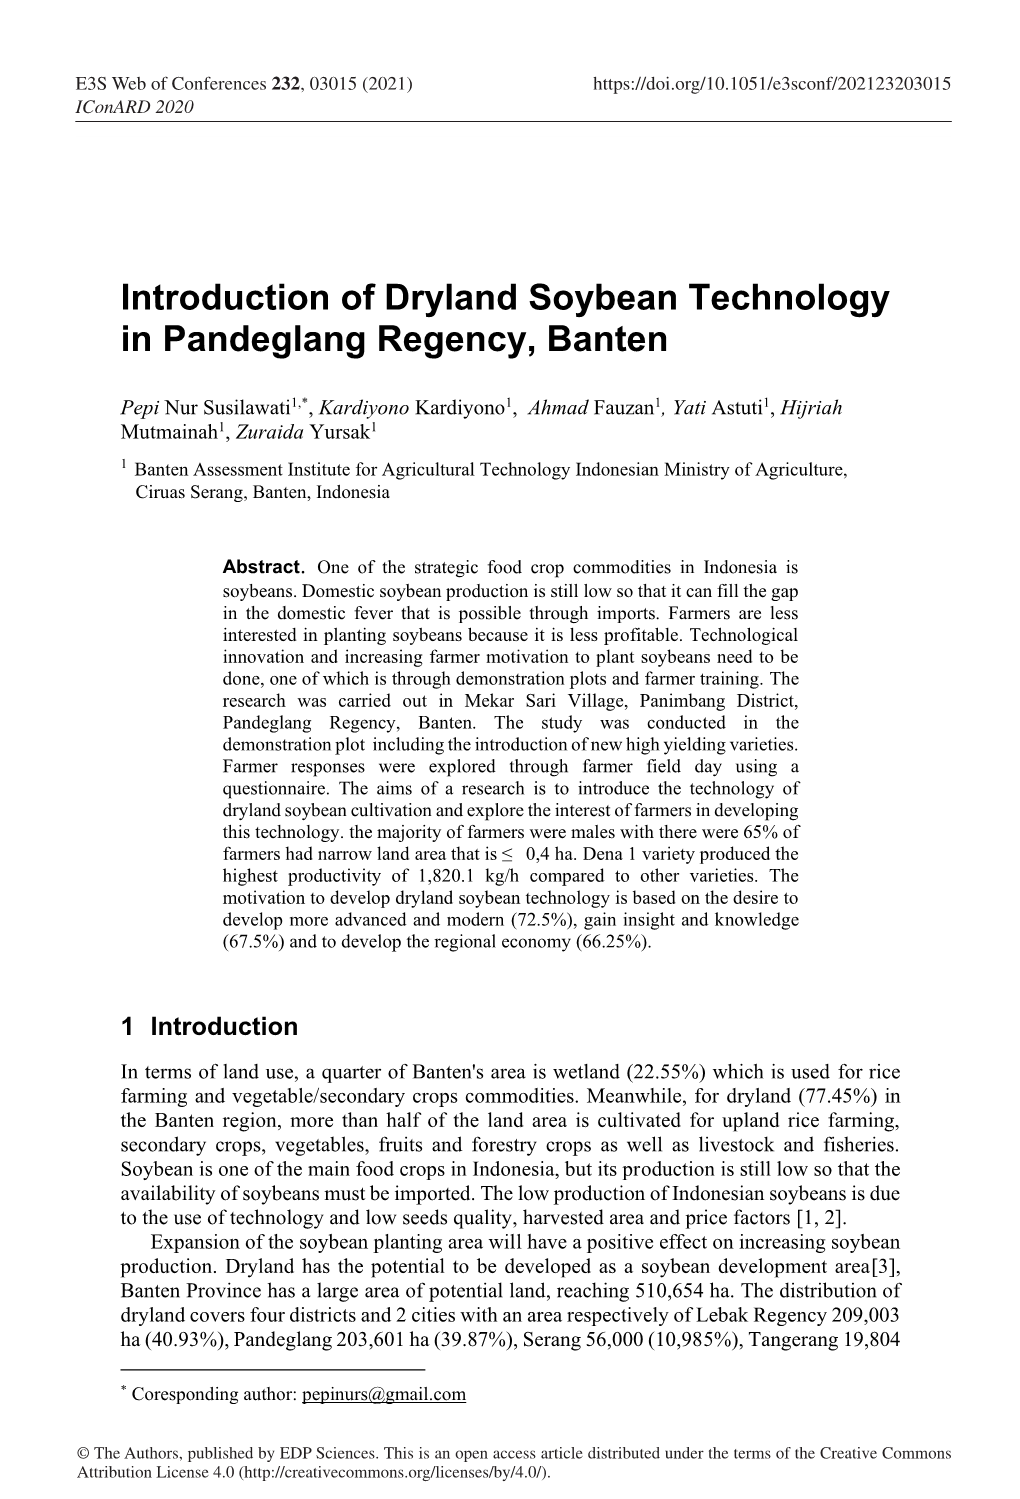 Introduction of Dryland Soybean Technology in Pandeglang Regency, Banten